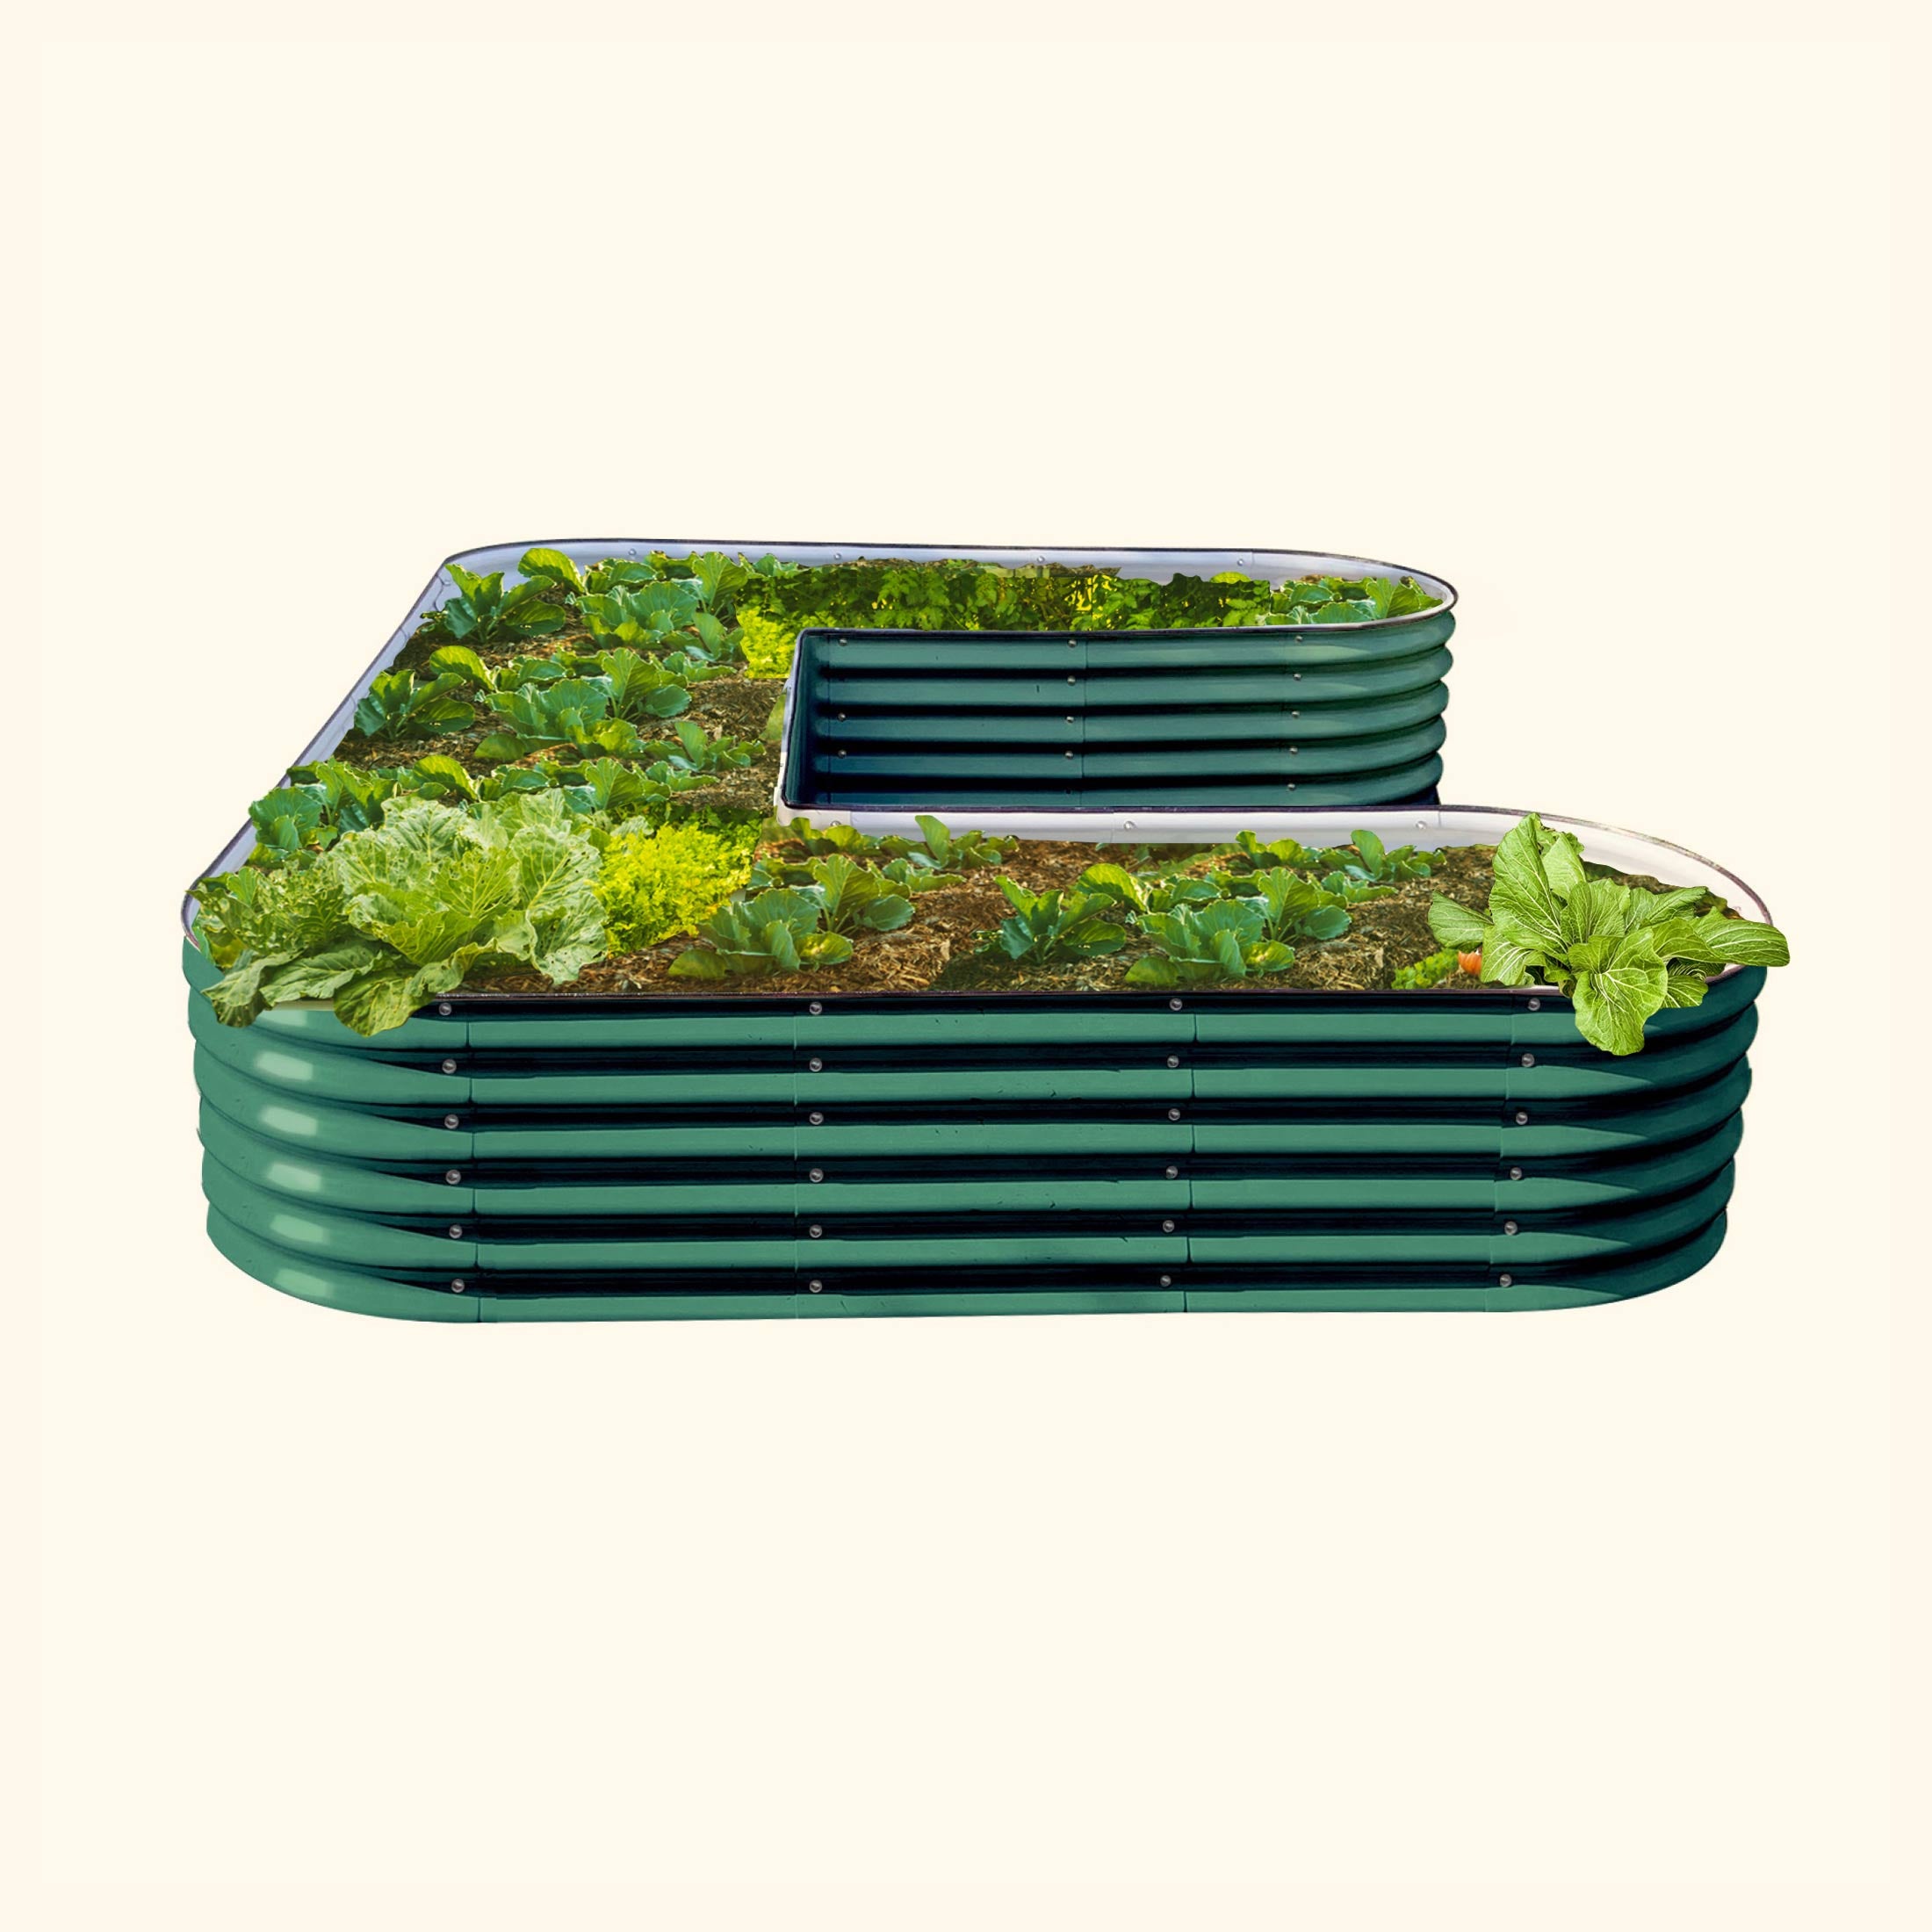 17 tall U-shaped metal garden container - Large Size | British Green | Vego Garden raised garden bed